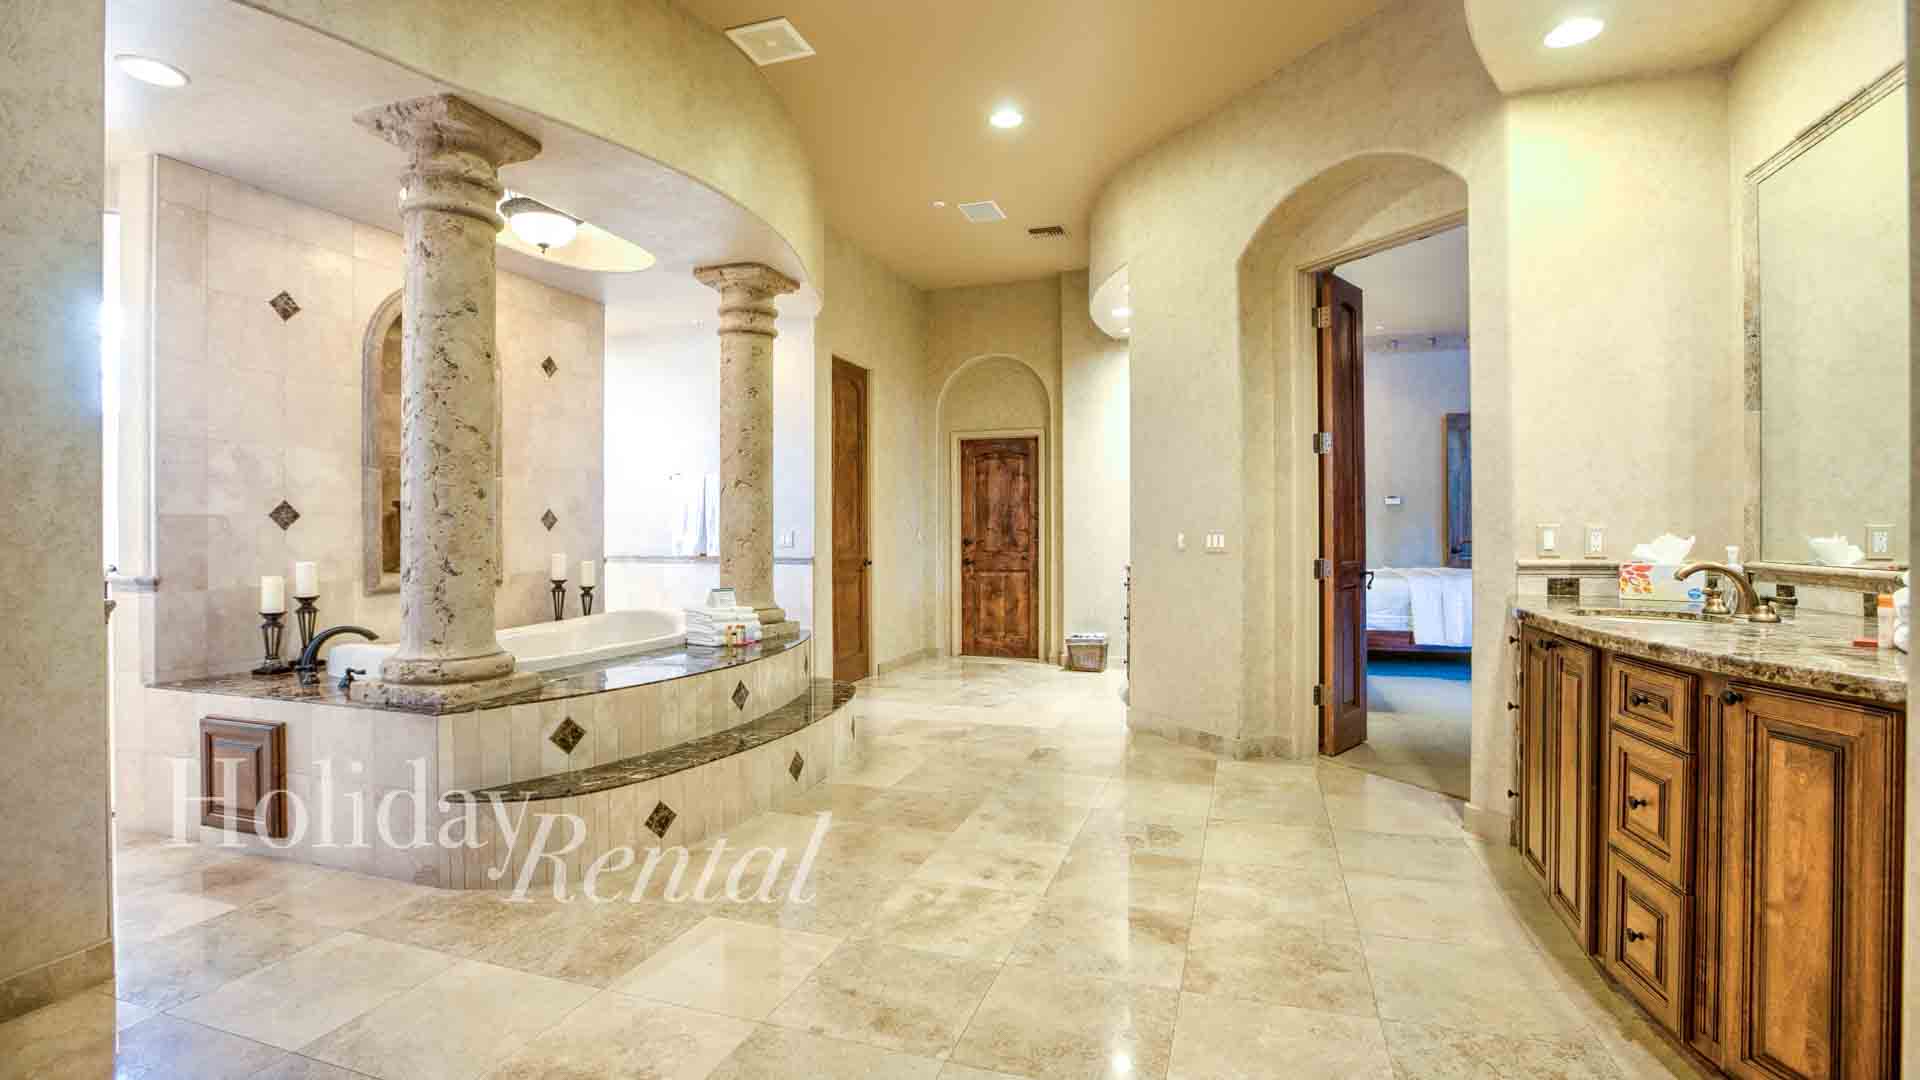 spacious master bathroom scottsdale luxury vacation rental